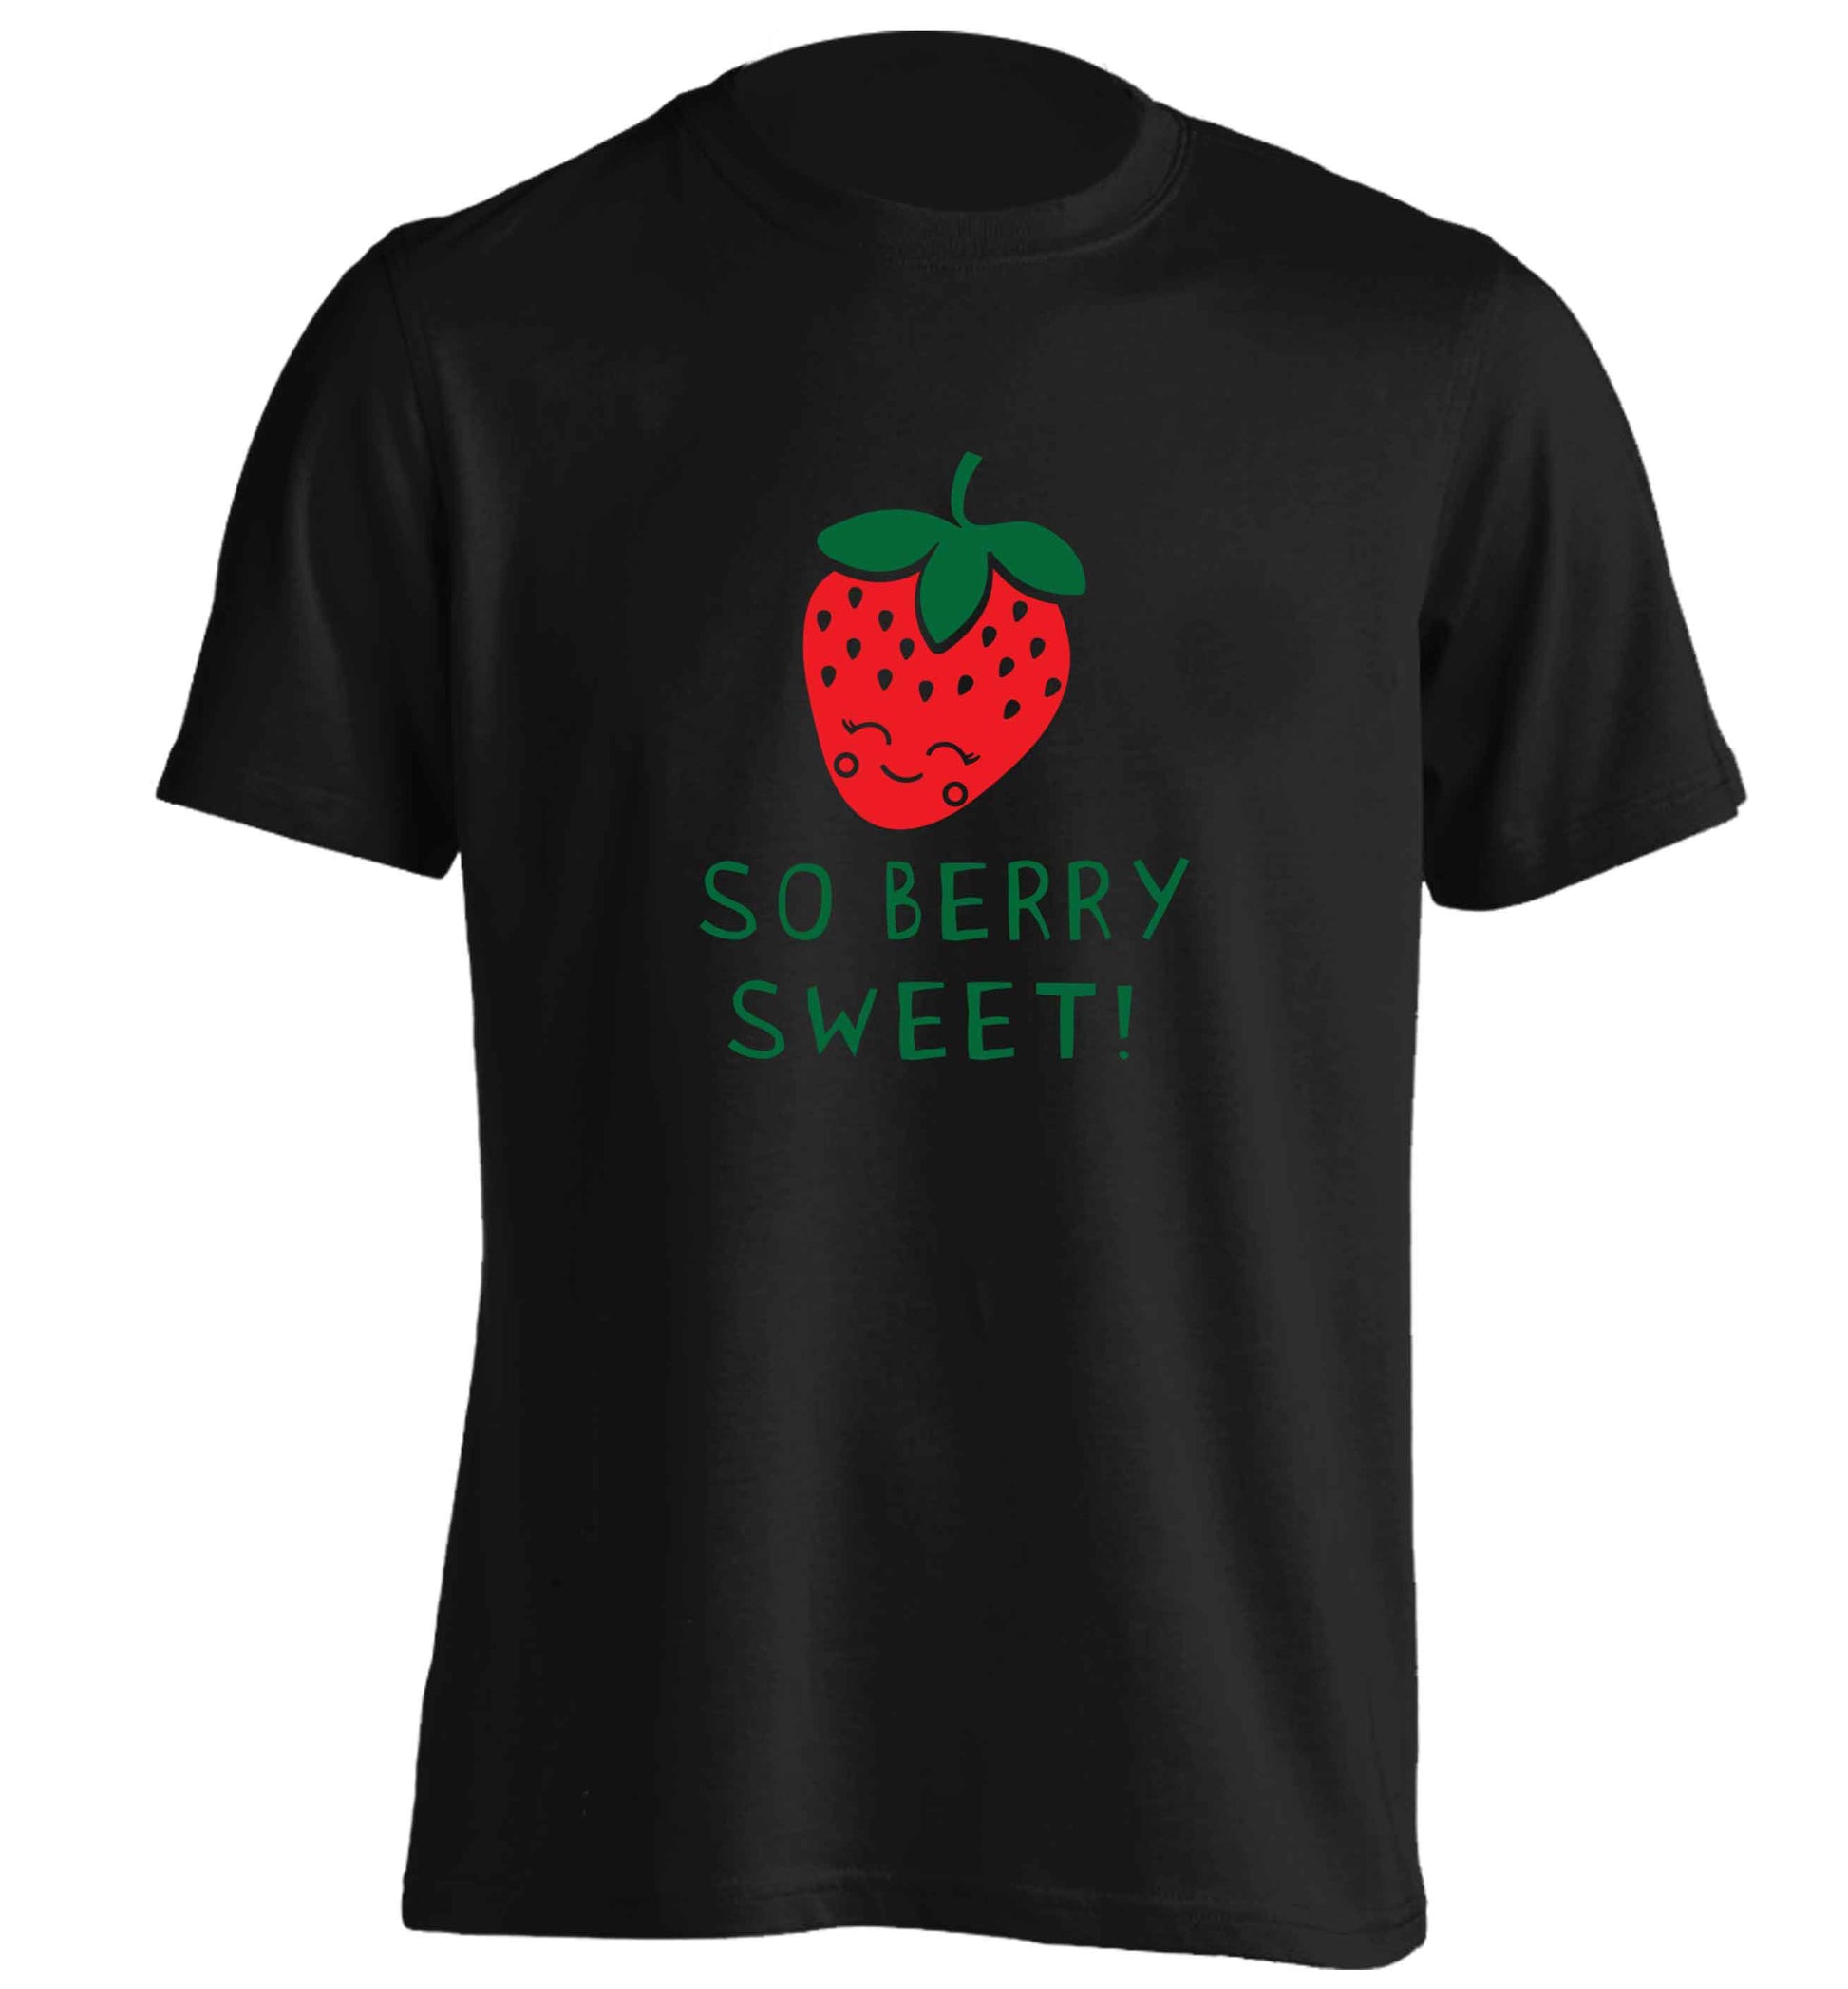 So berry sweet adults unisex black Tshirt 2XL